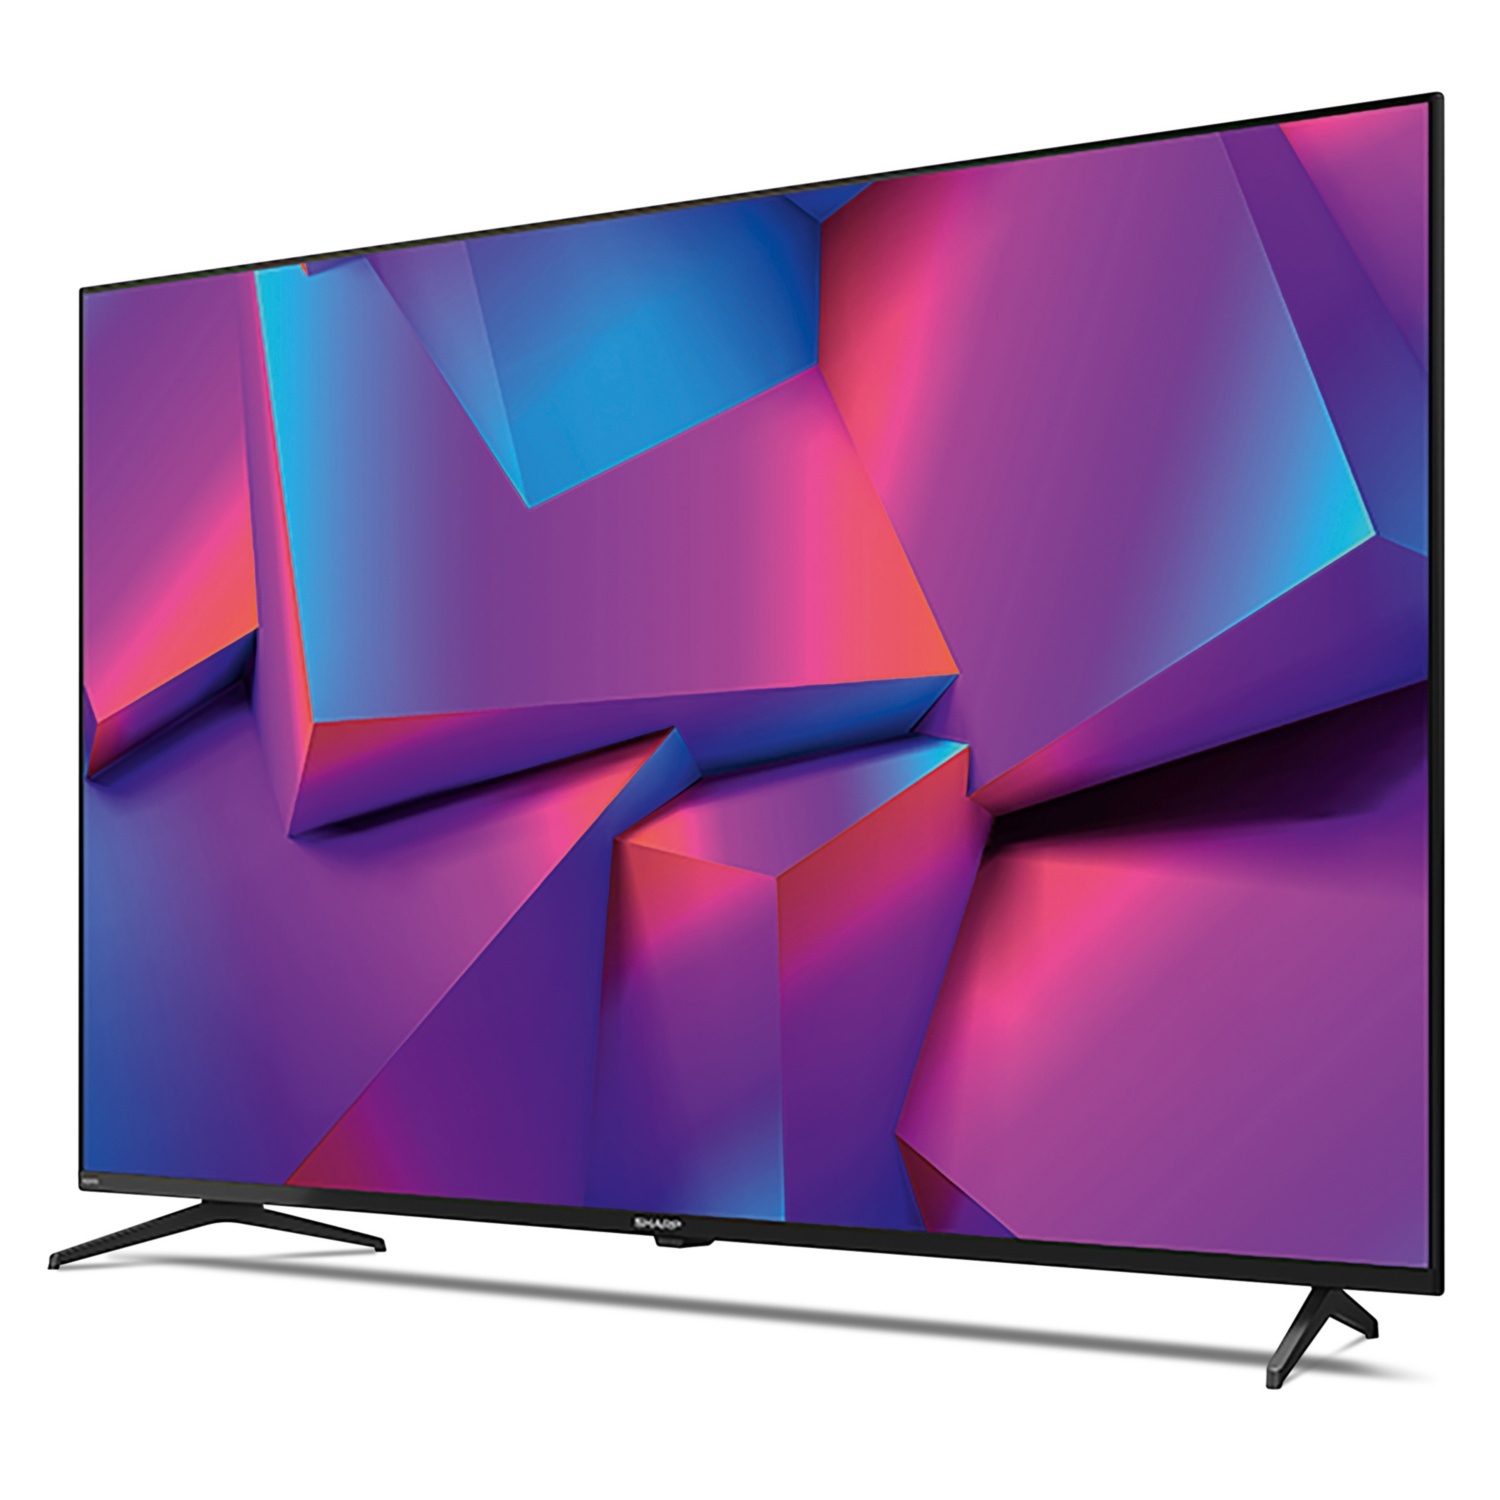 SHARP 4K Ultra HD Smart-TV 50“ (126 cm) FK2E